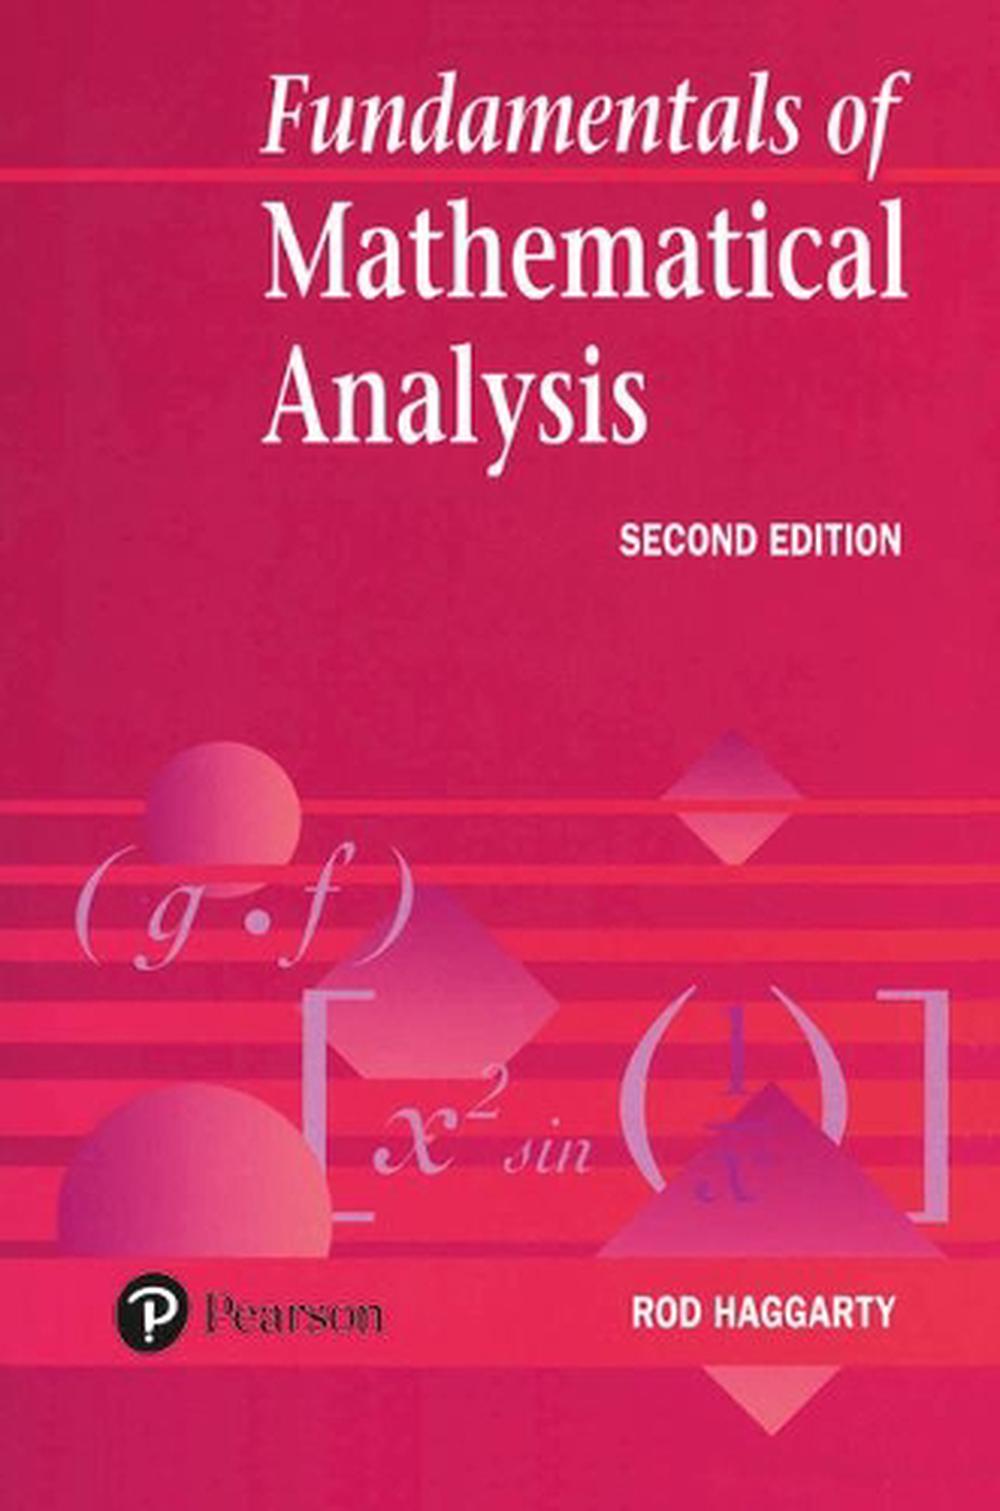 principles of mathematical analysis.3rd ed pdf